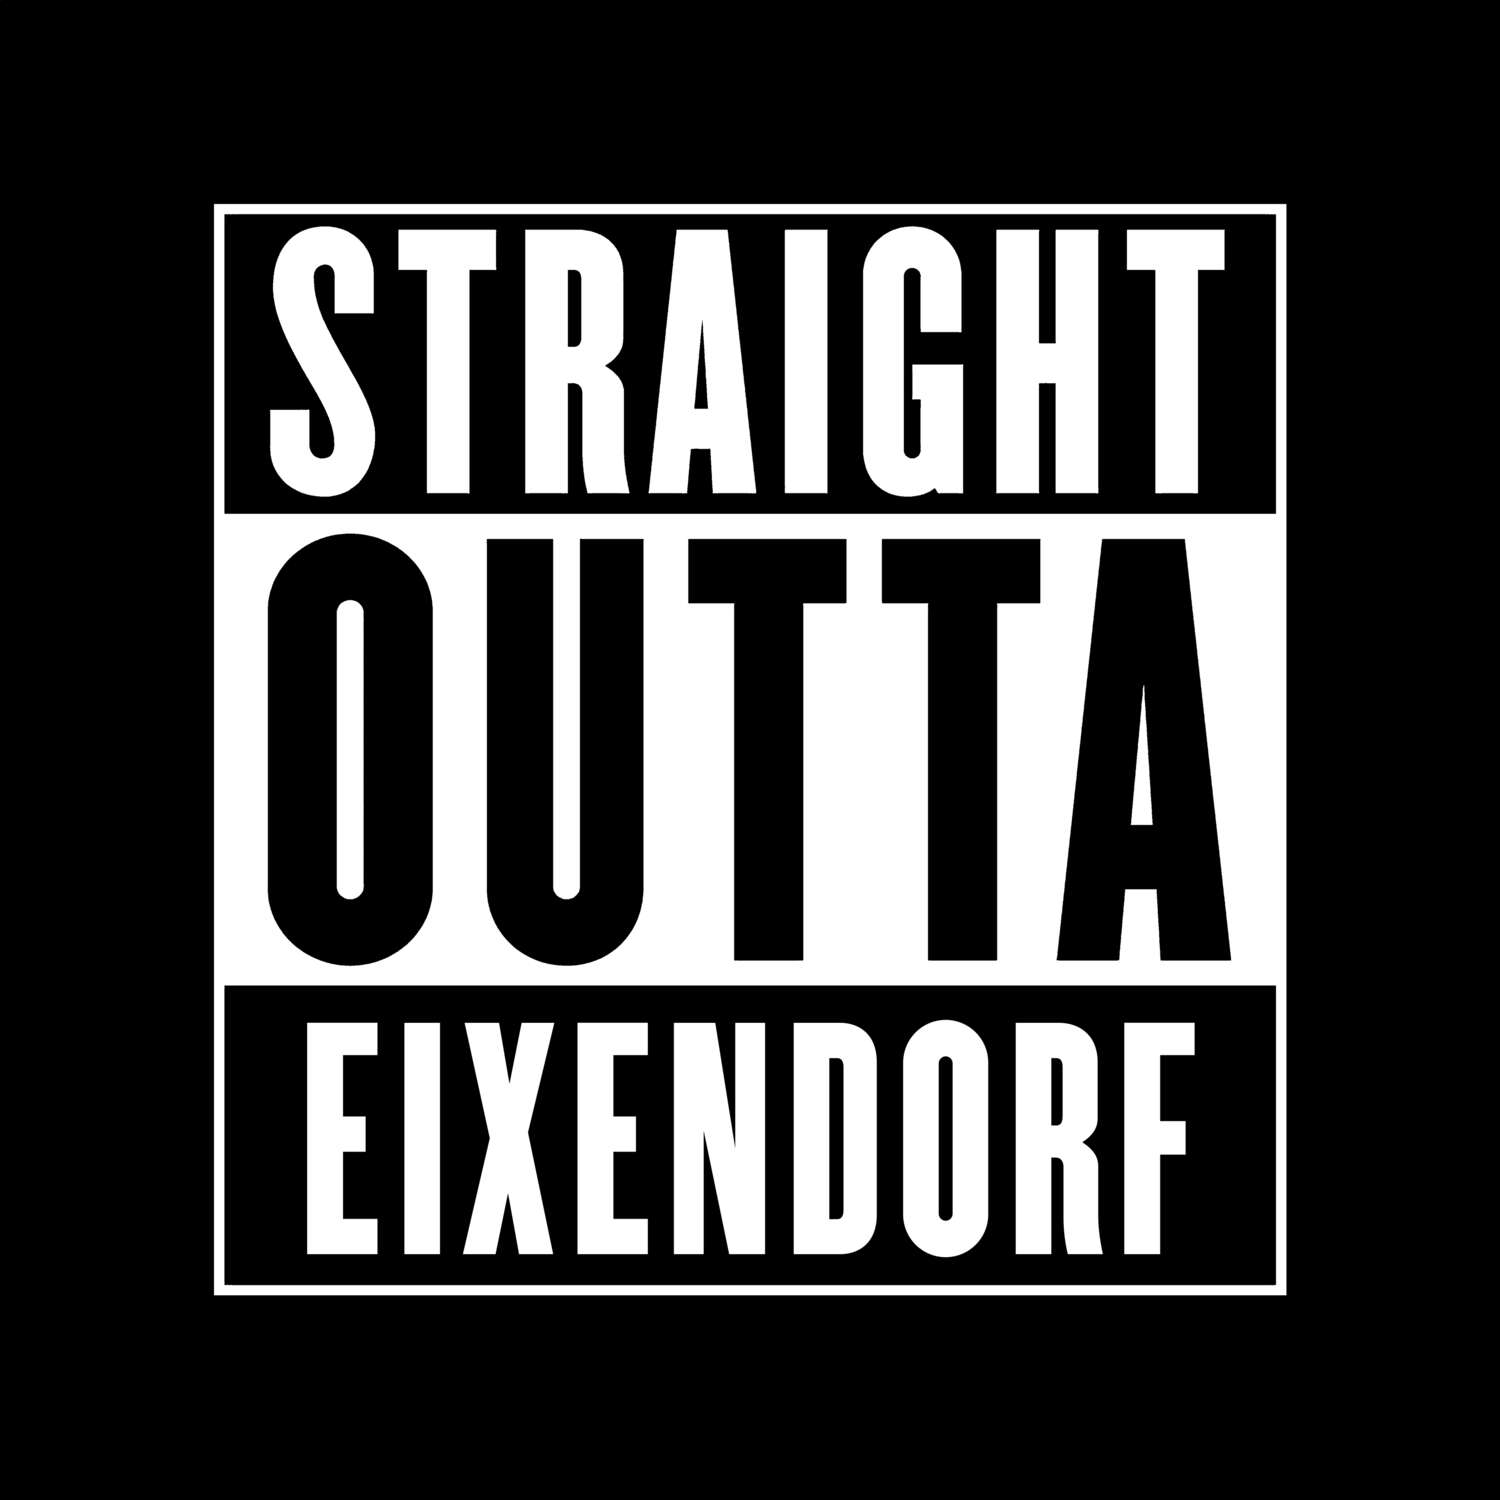 Eixendorf T-Shirt »Straight Outta«